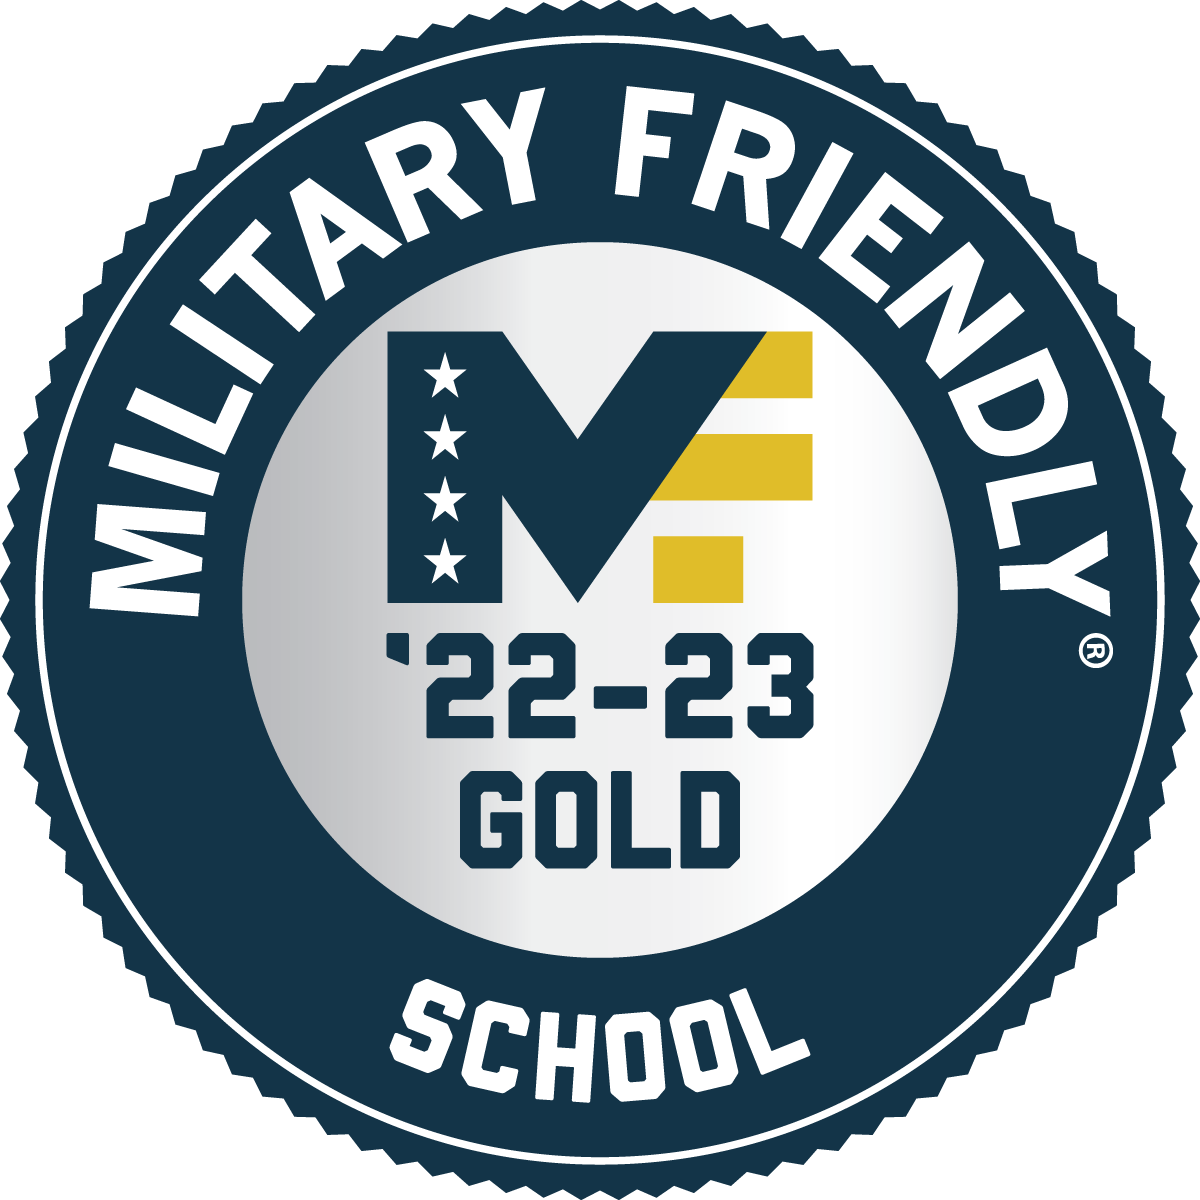 Military Friendly School Gold Ranking 2022-2023